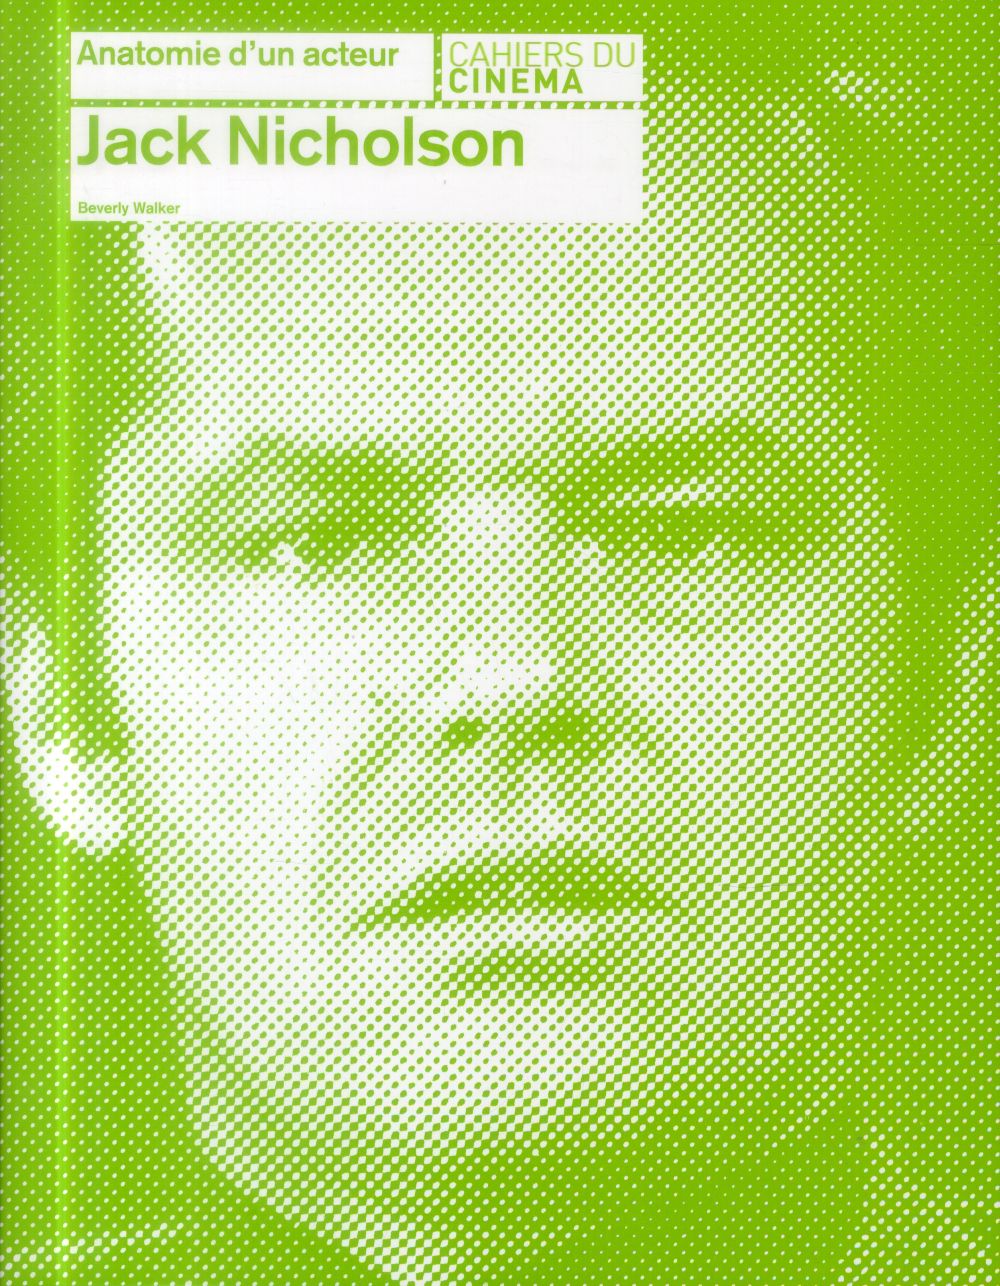 JACK NICHOLSON